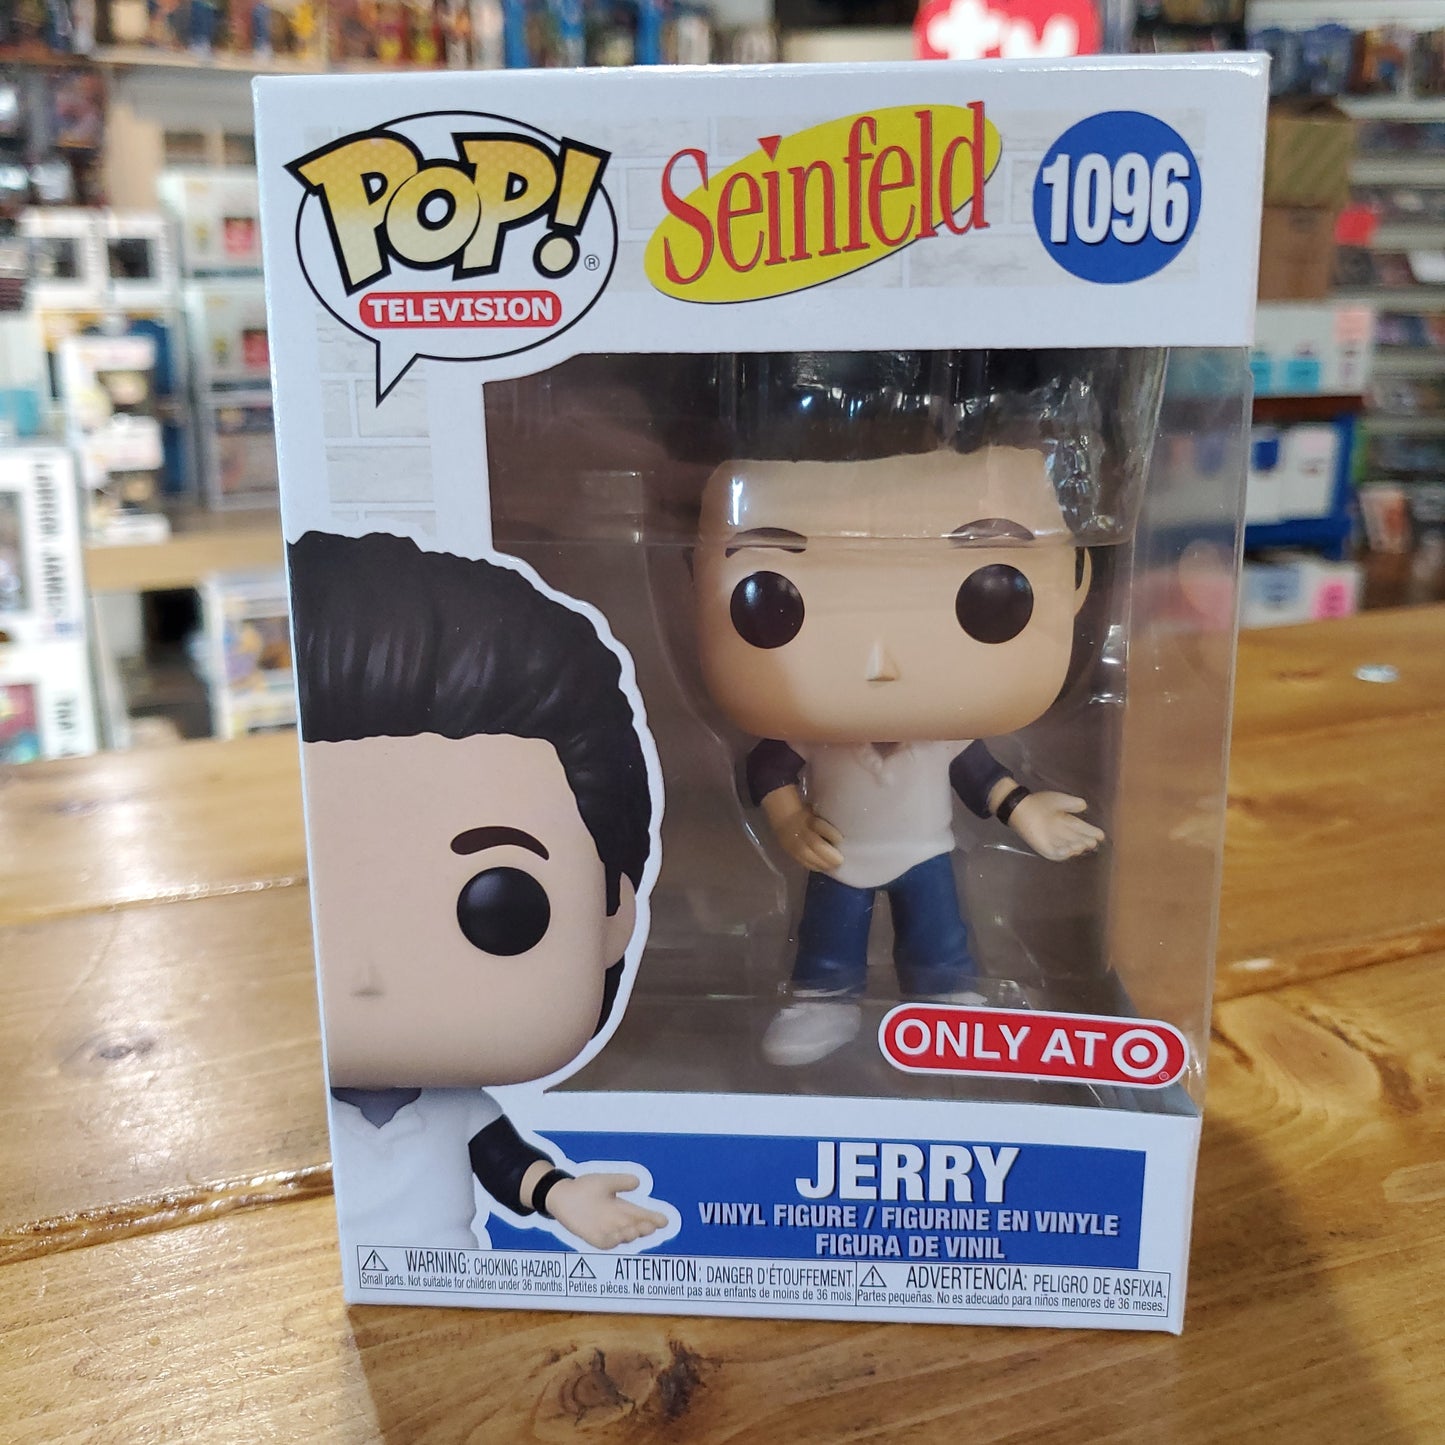 Seinfeld - Jerry #1096 Exclusive - Funko Pop! Vinyl Figure (Television)